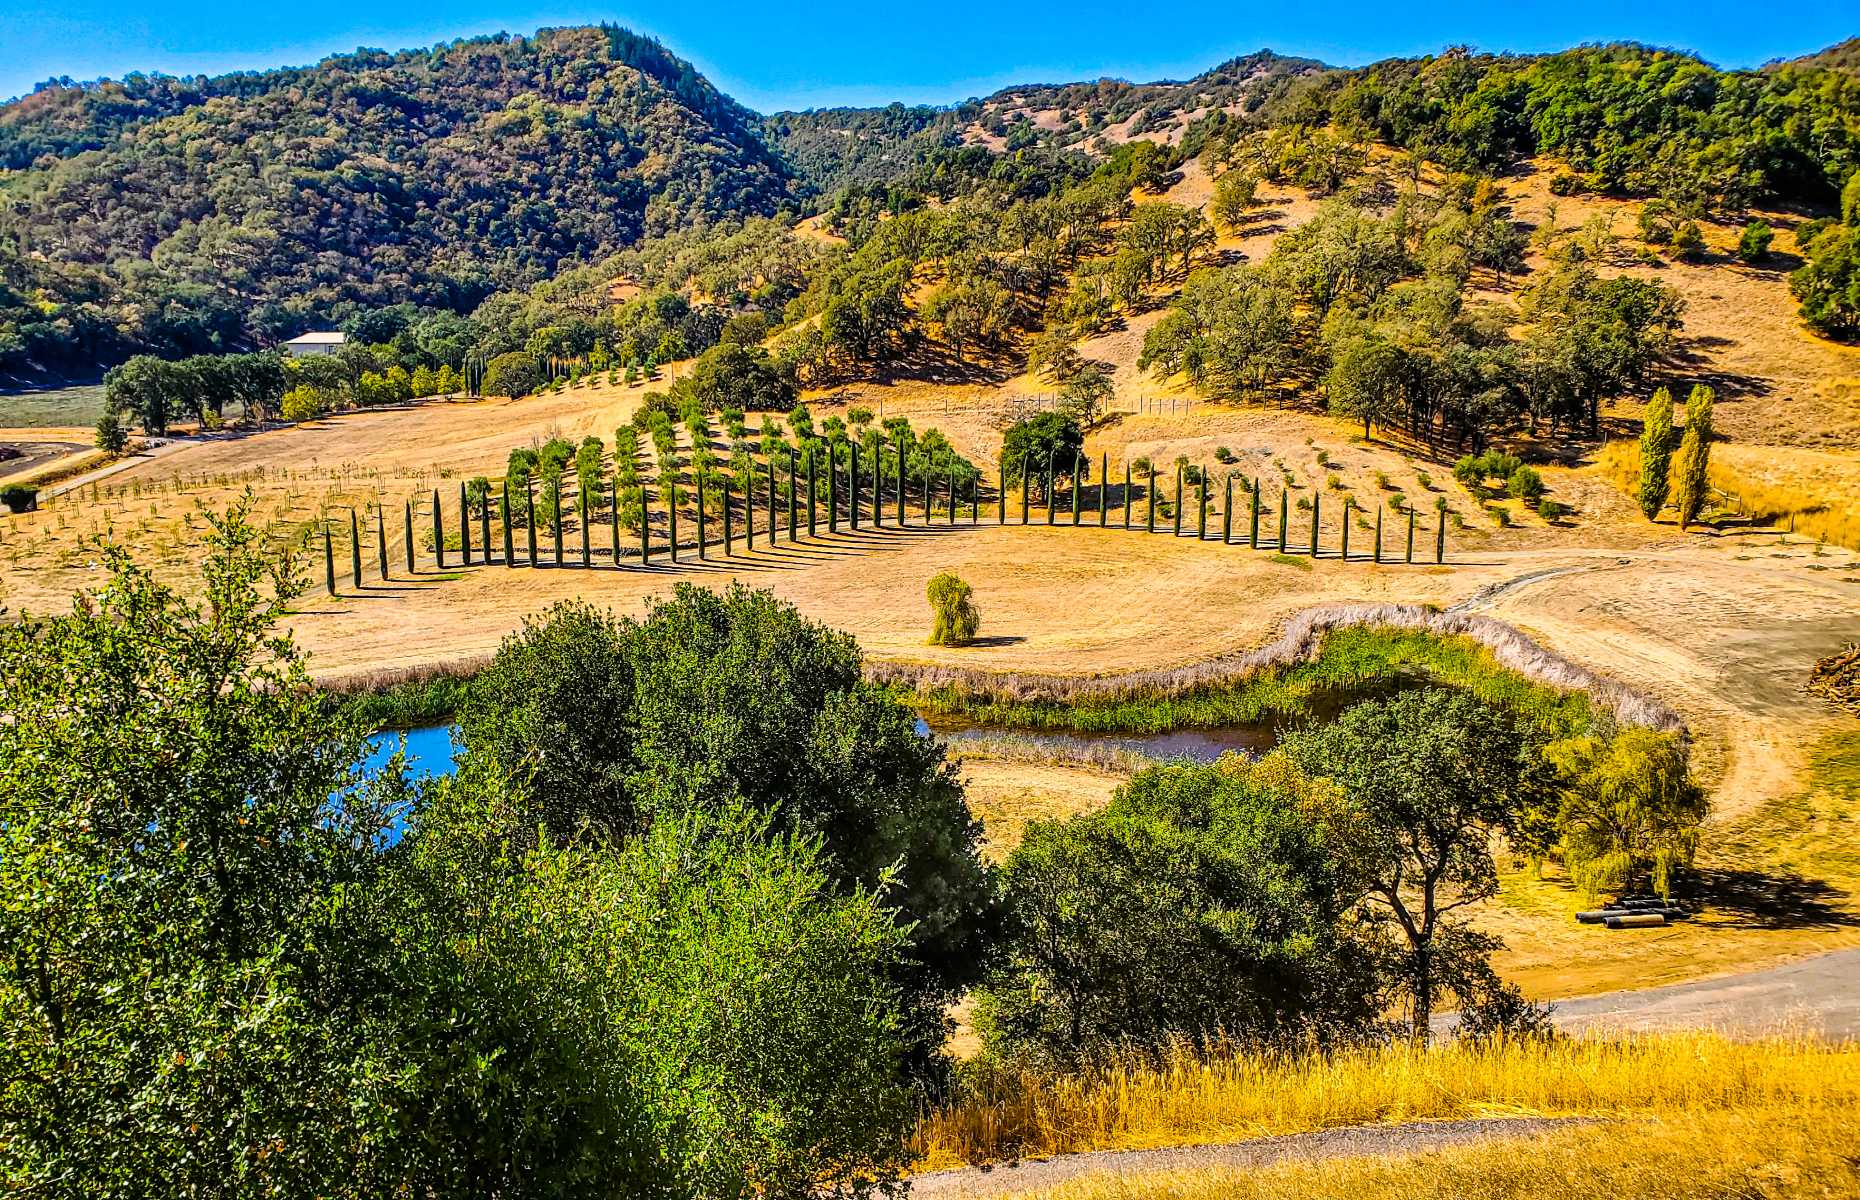 Mendocino wine country (Image: Maquita H/Shutterstock)